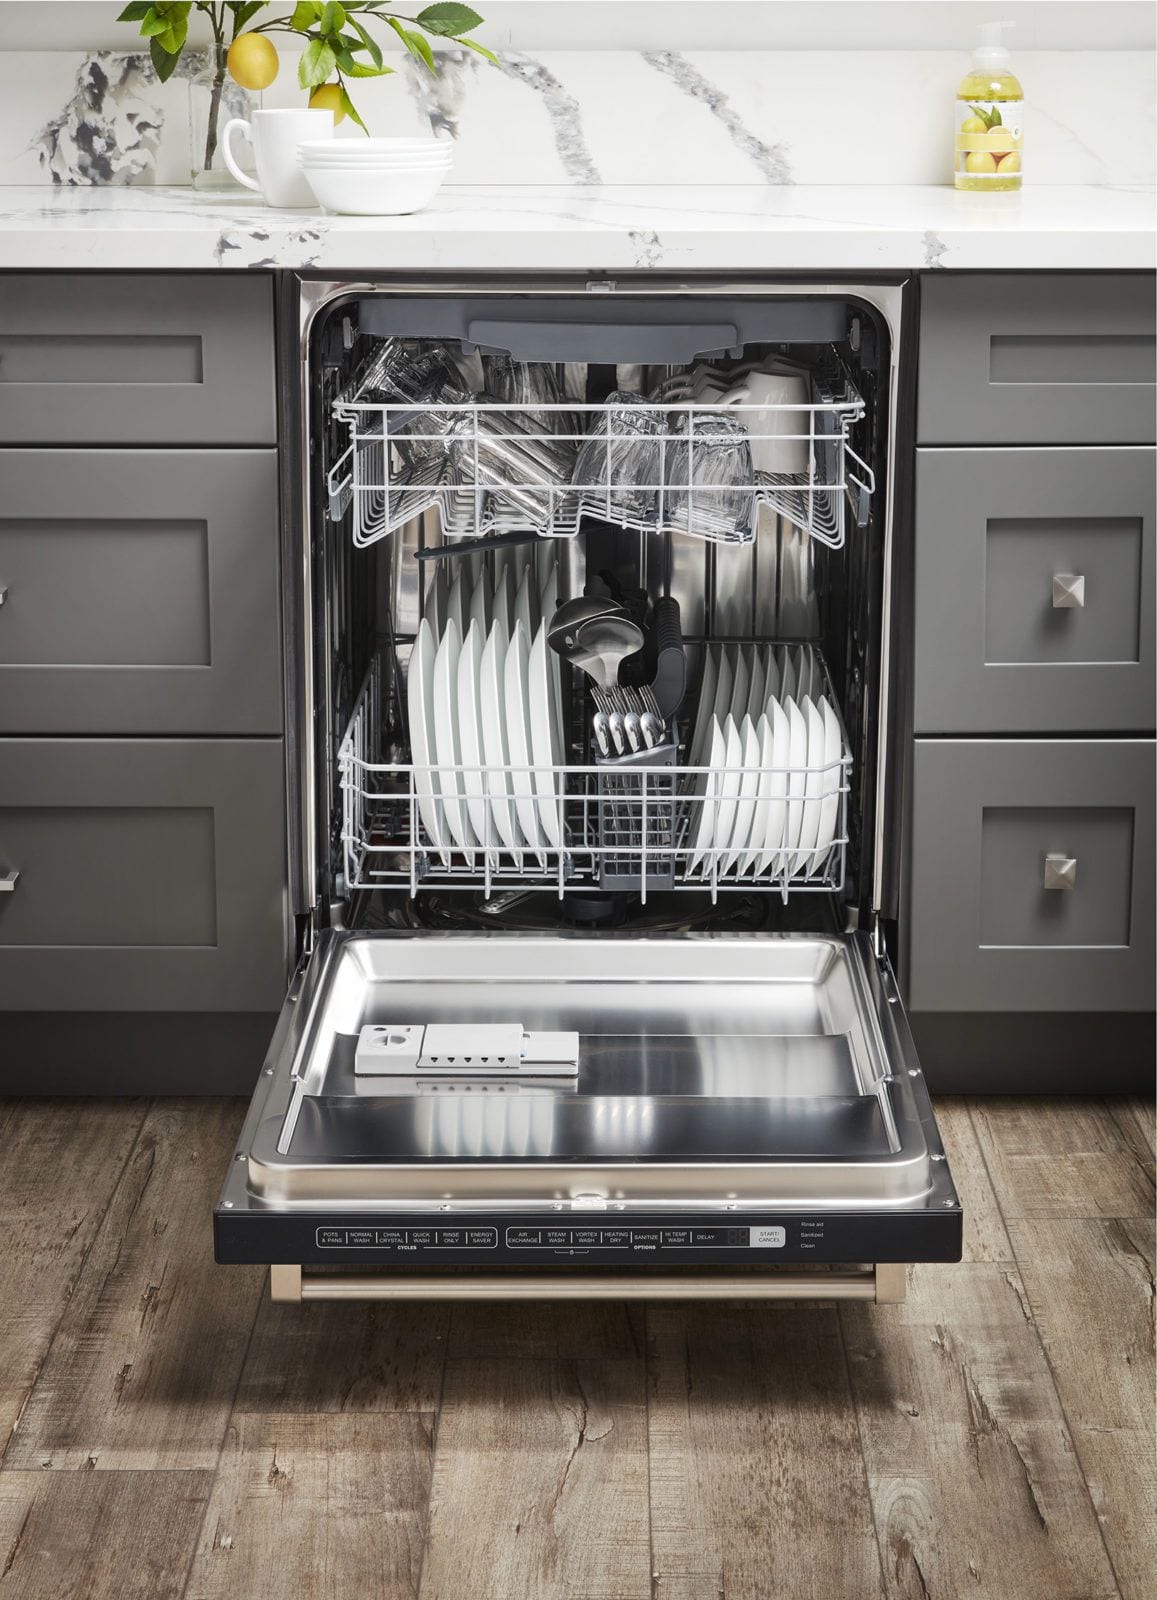 Brand New Dishwasher